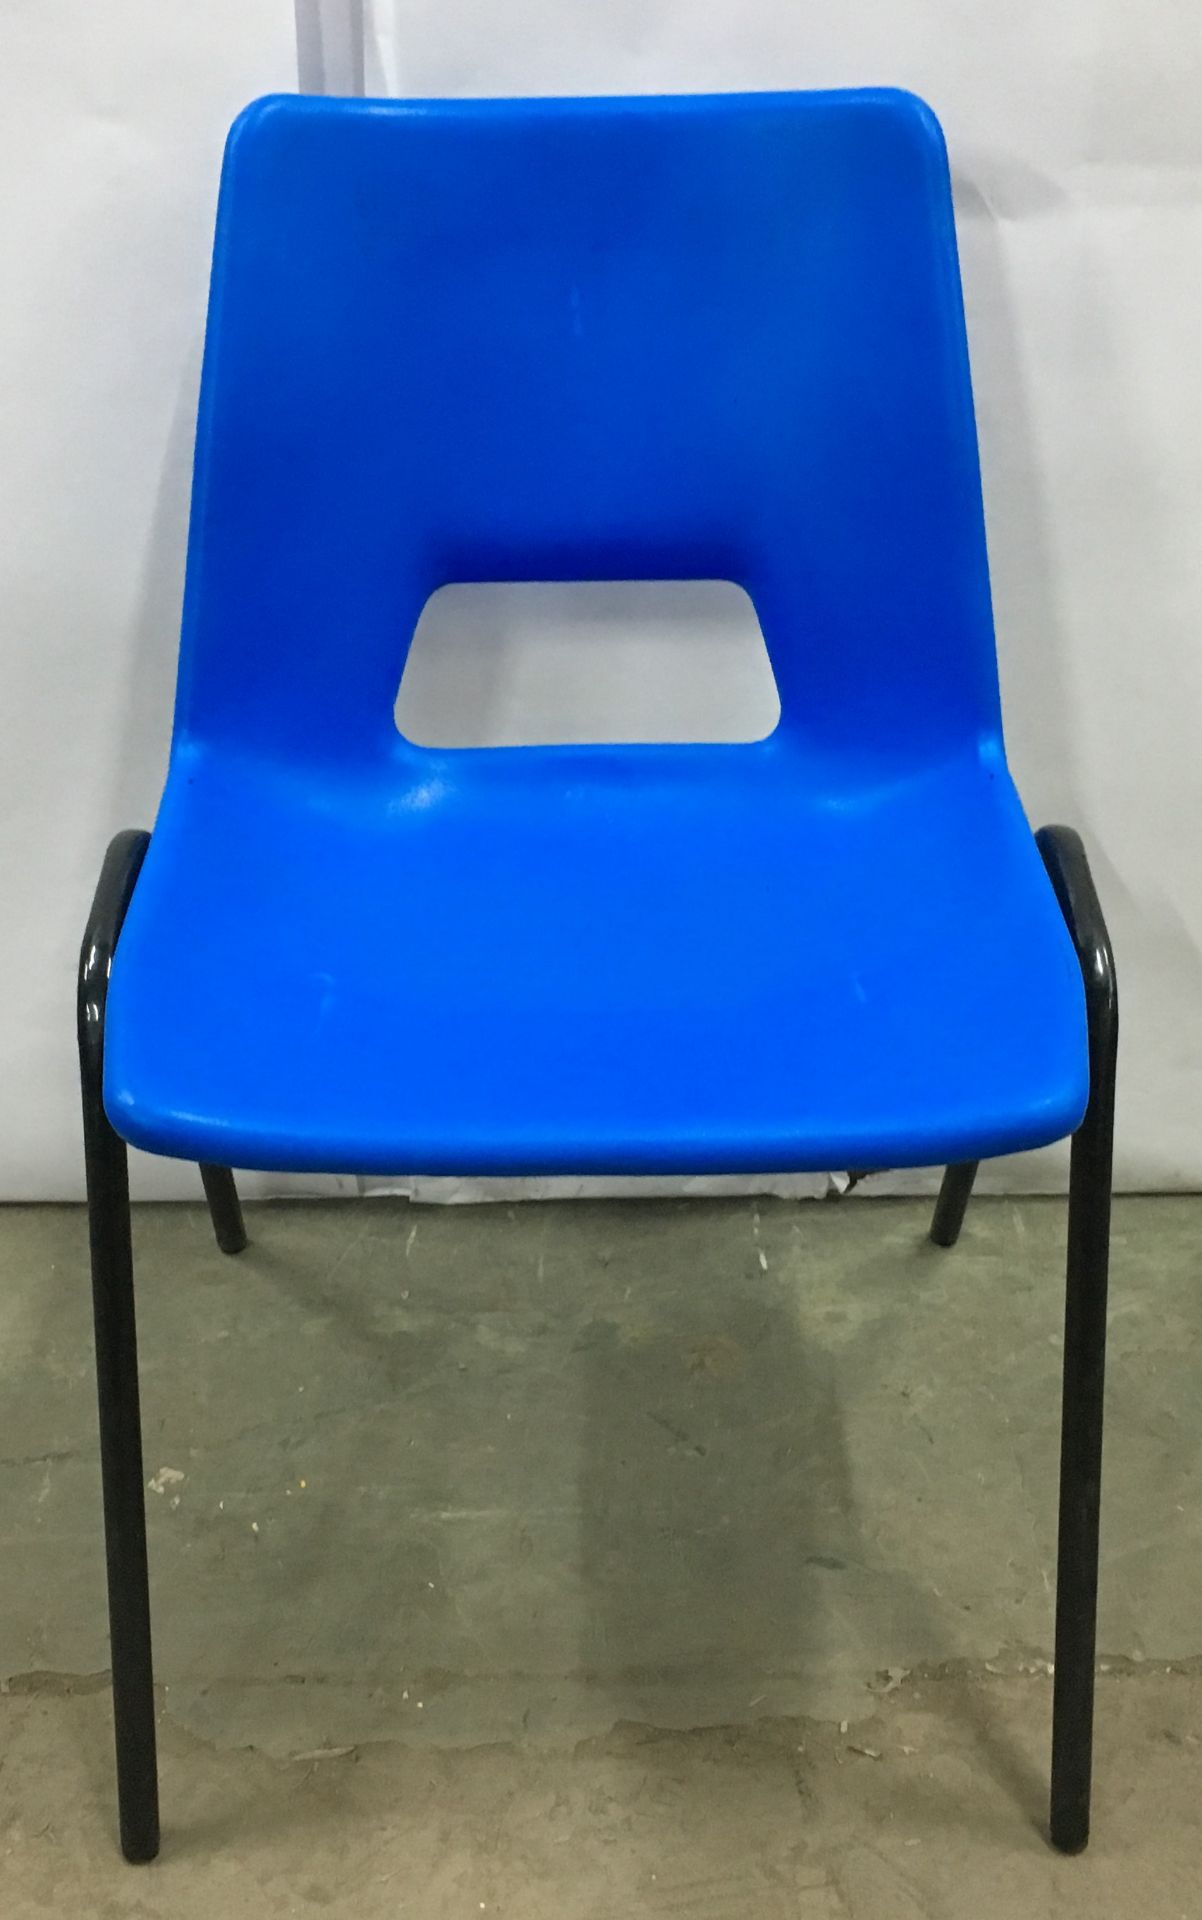 5x Blue Plastic Chairs